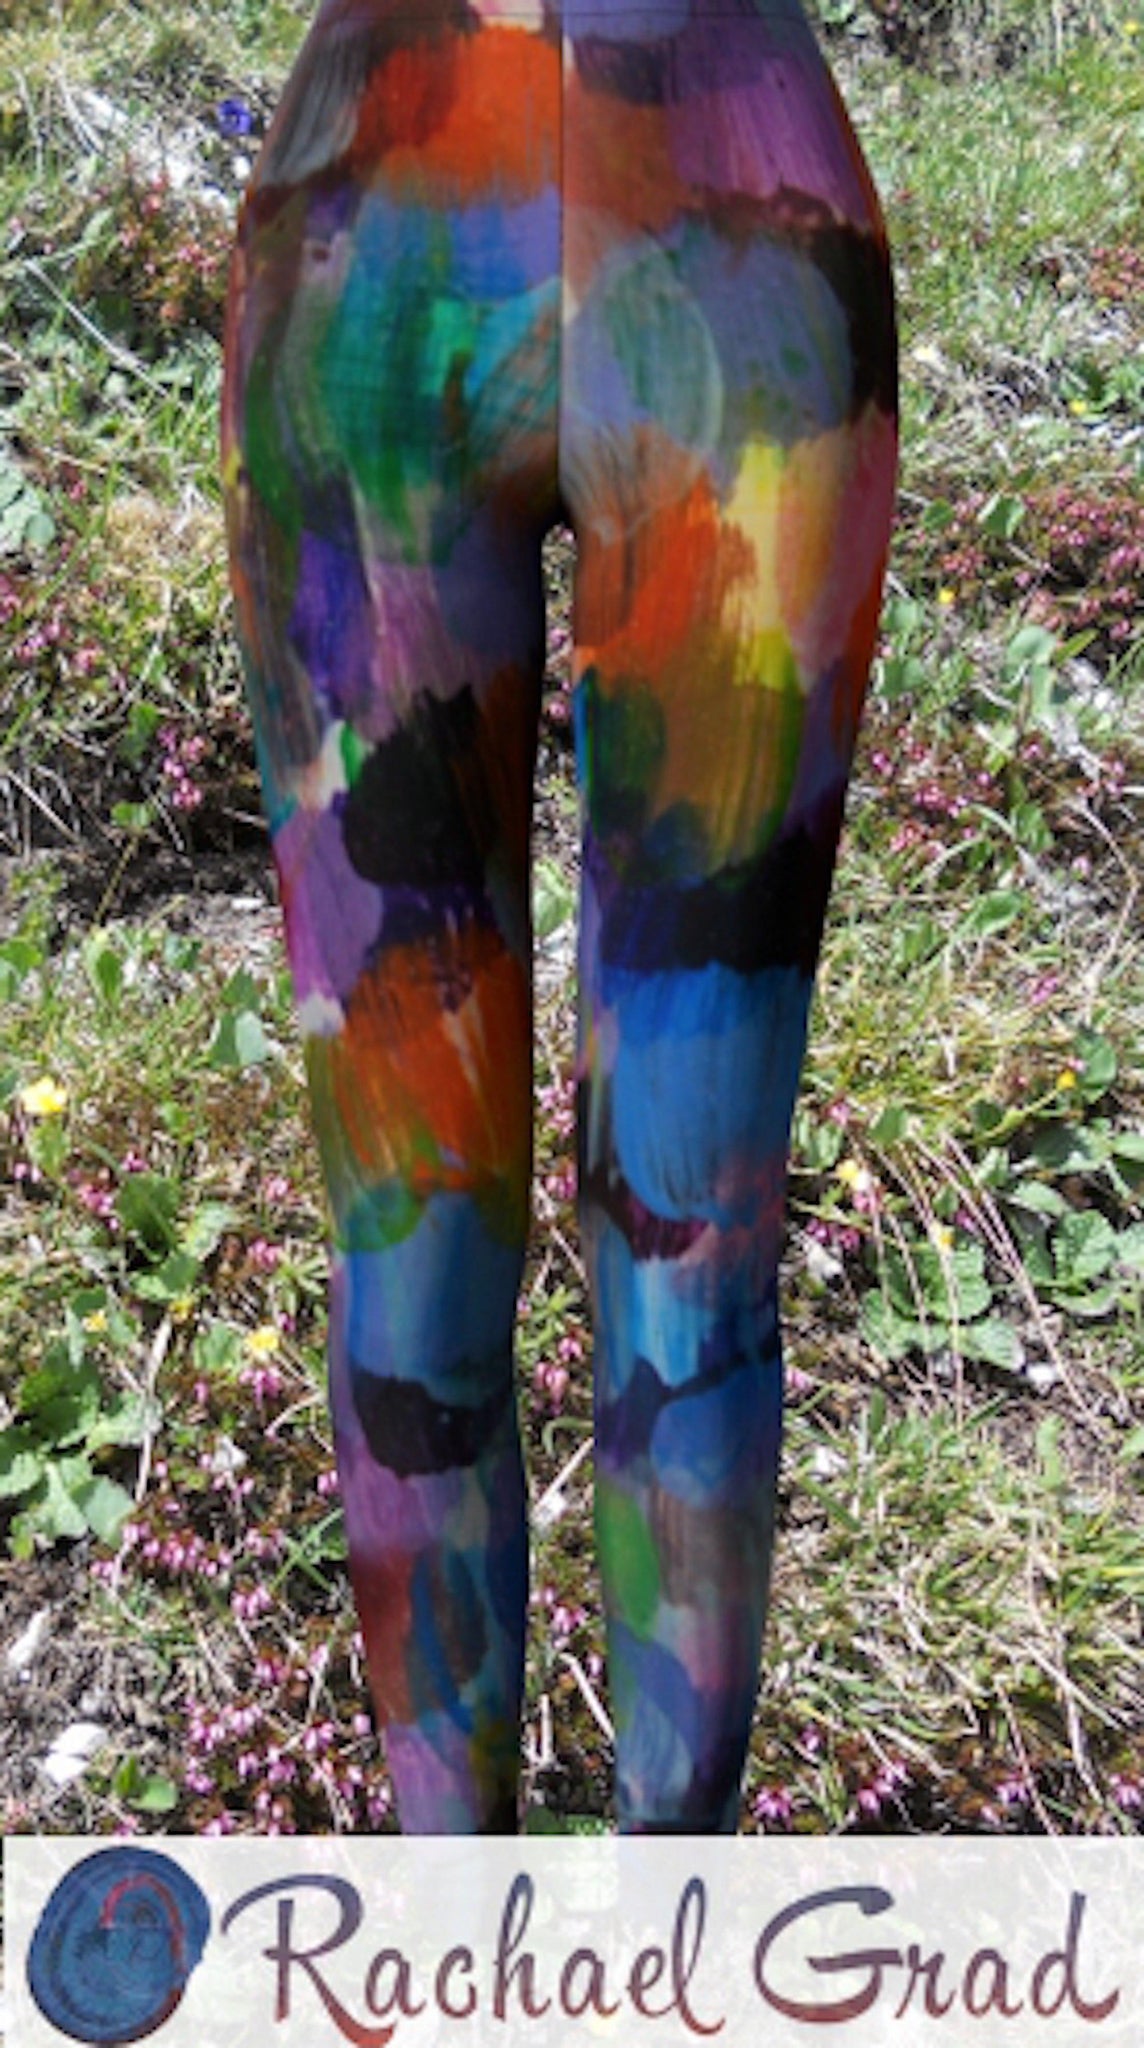 Abstract Blue Leggings, Printed Yoga Pants, Women Long Leggings